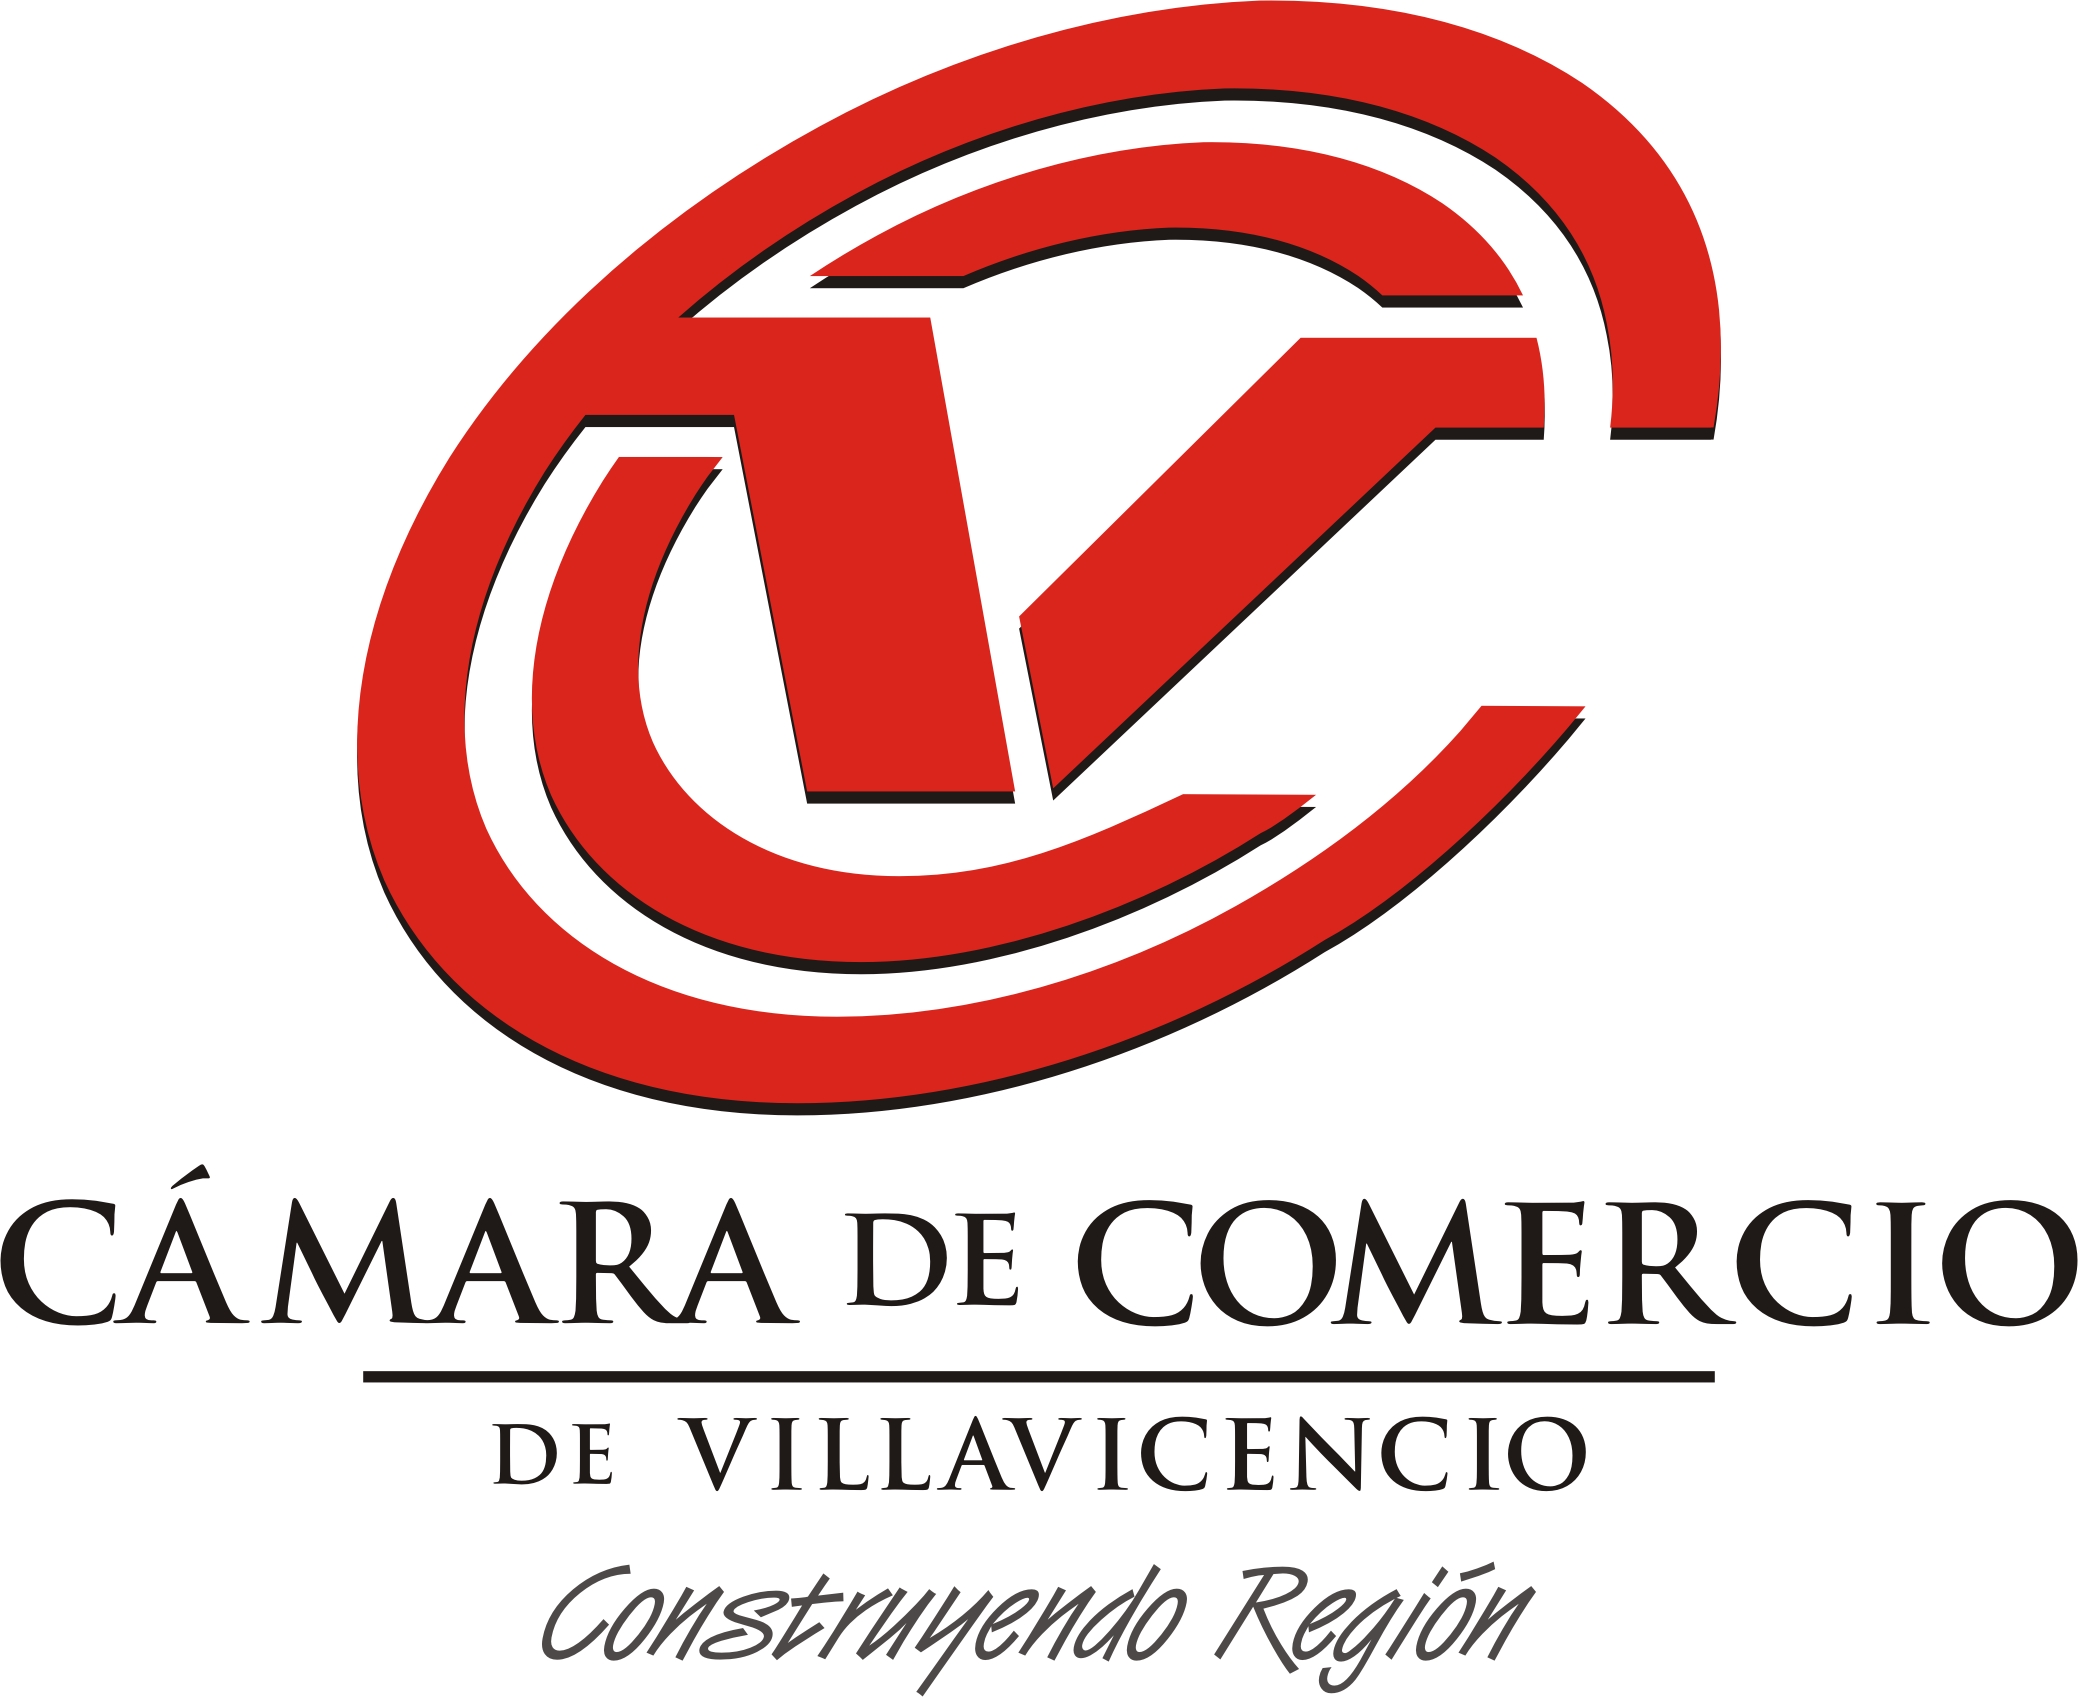 Camara de Comercio de Neiva Logo photo - 1